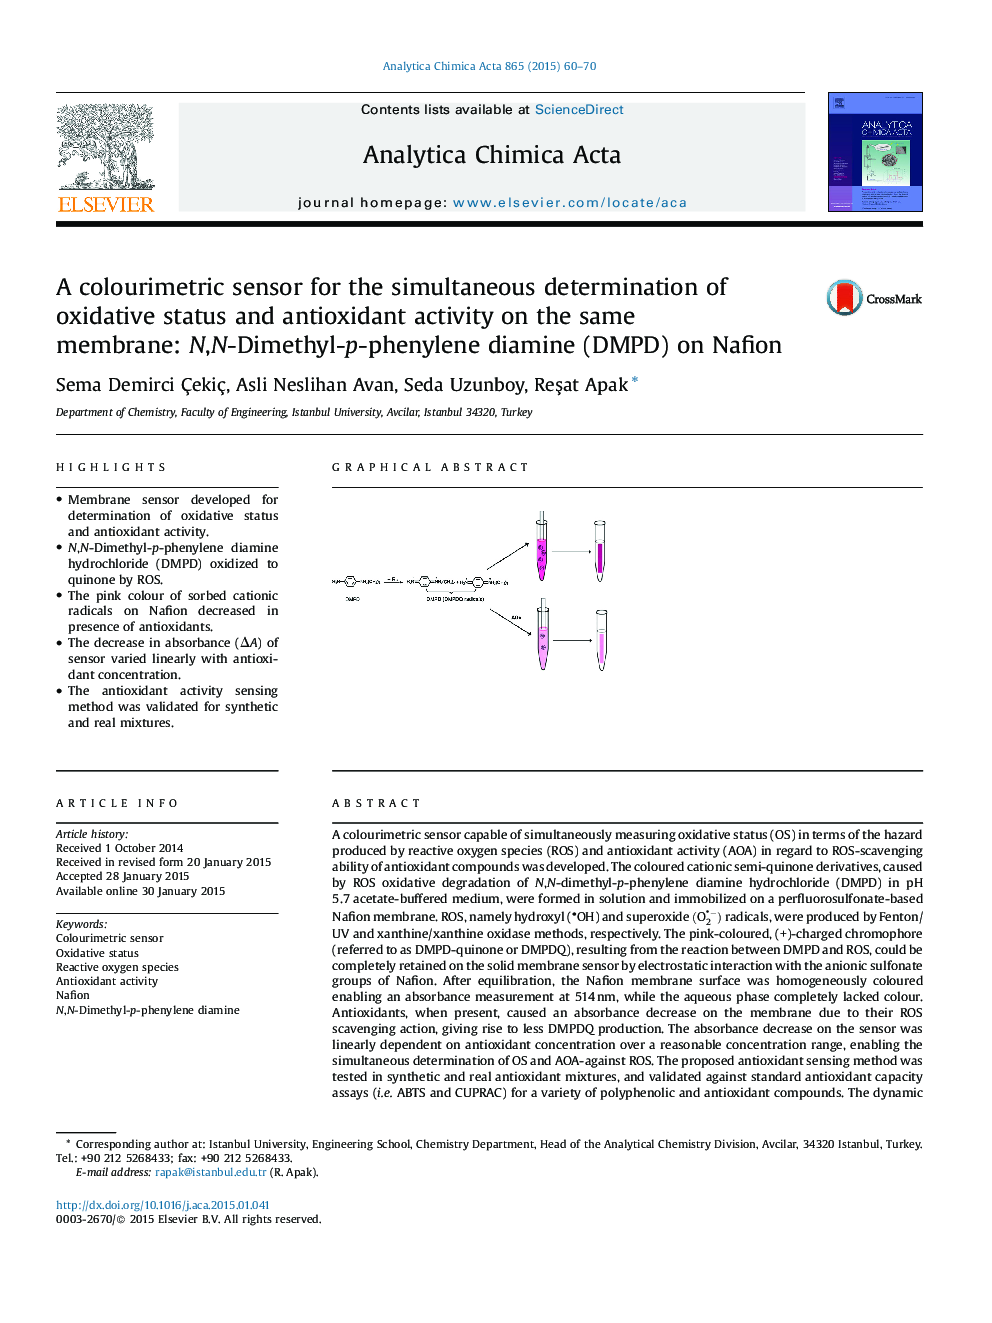 A colourimetric sensor for the simultaneous determination of oxidative status and antioxidant activity on the same membrane: N,N-Dimethyl-p-phenylene diamine (DMPD) on Nafion